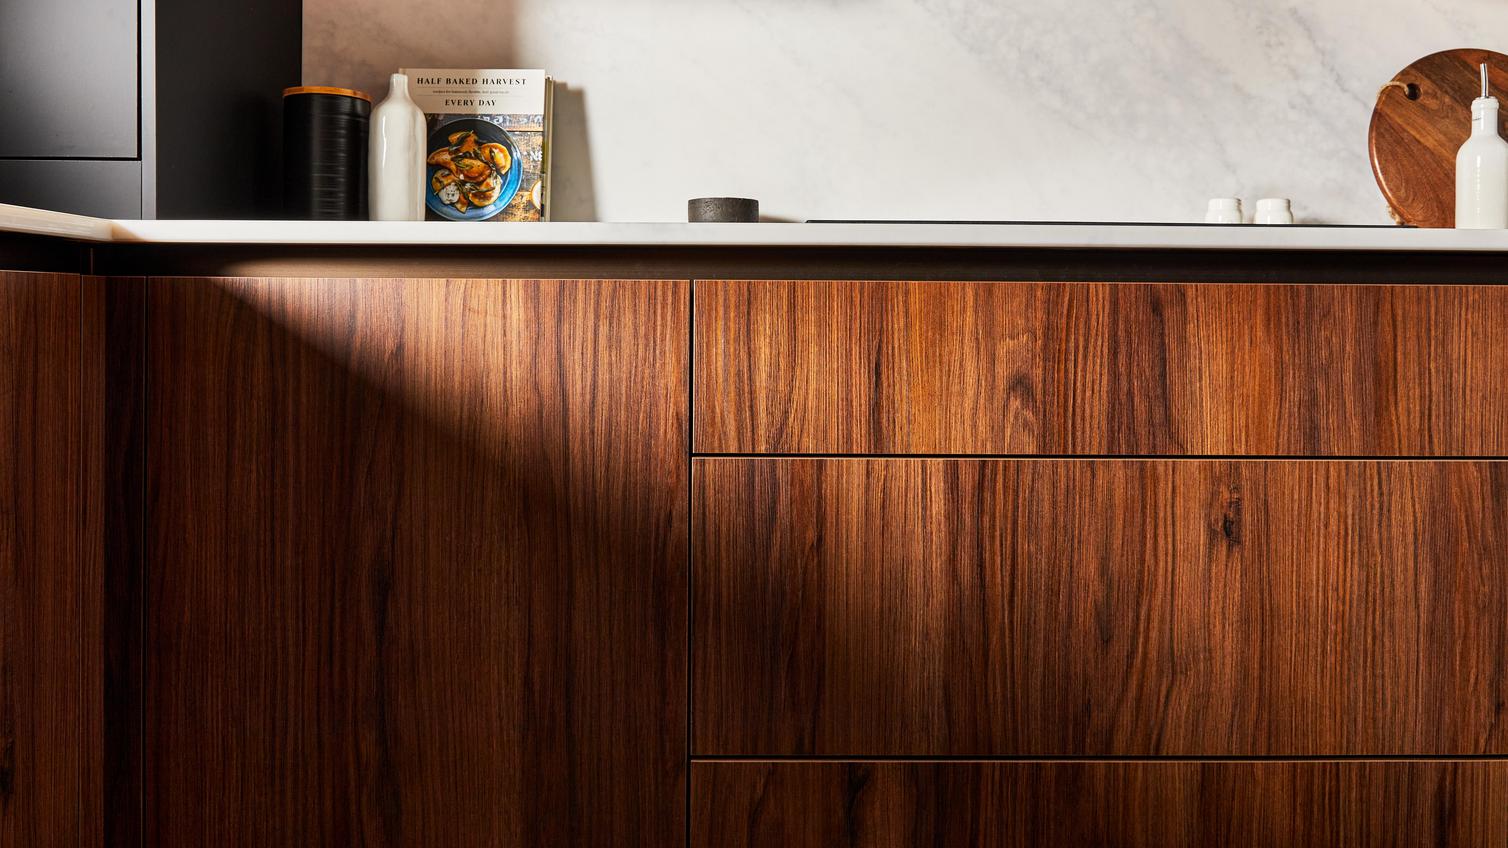 A modern luxury kitchen featuring walnut cupboard doors in a slab design, handleless units, and bespoke white worktops.